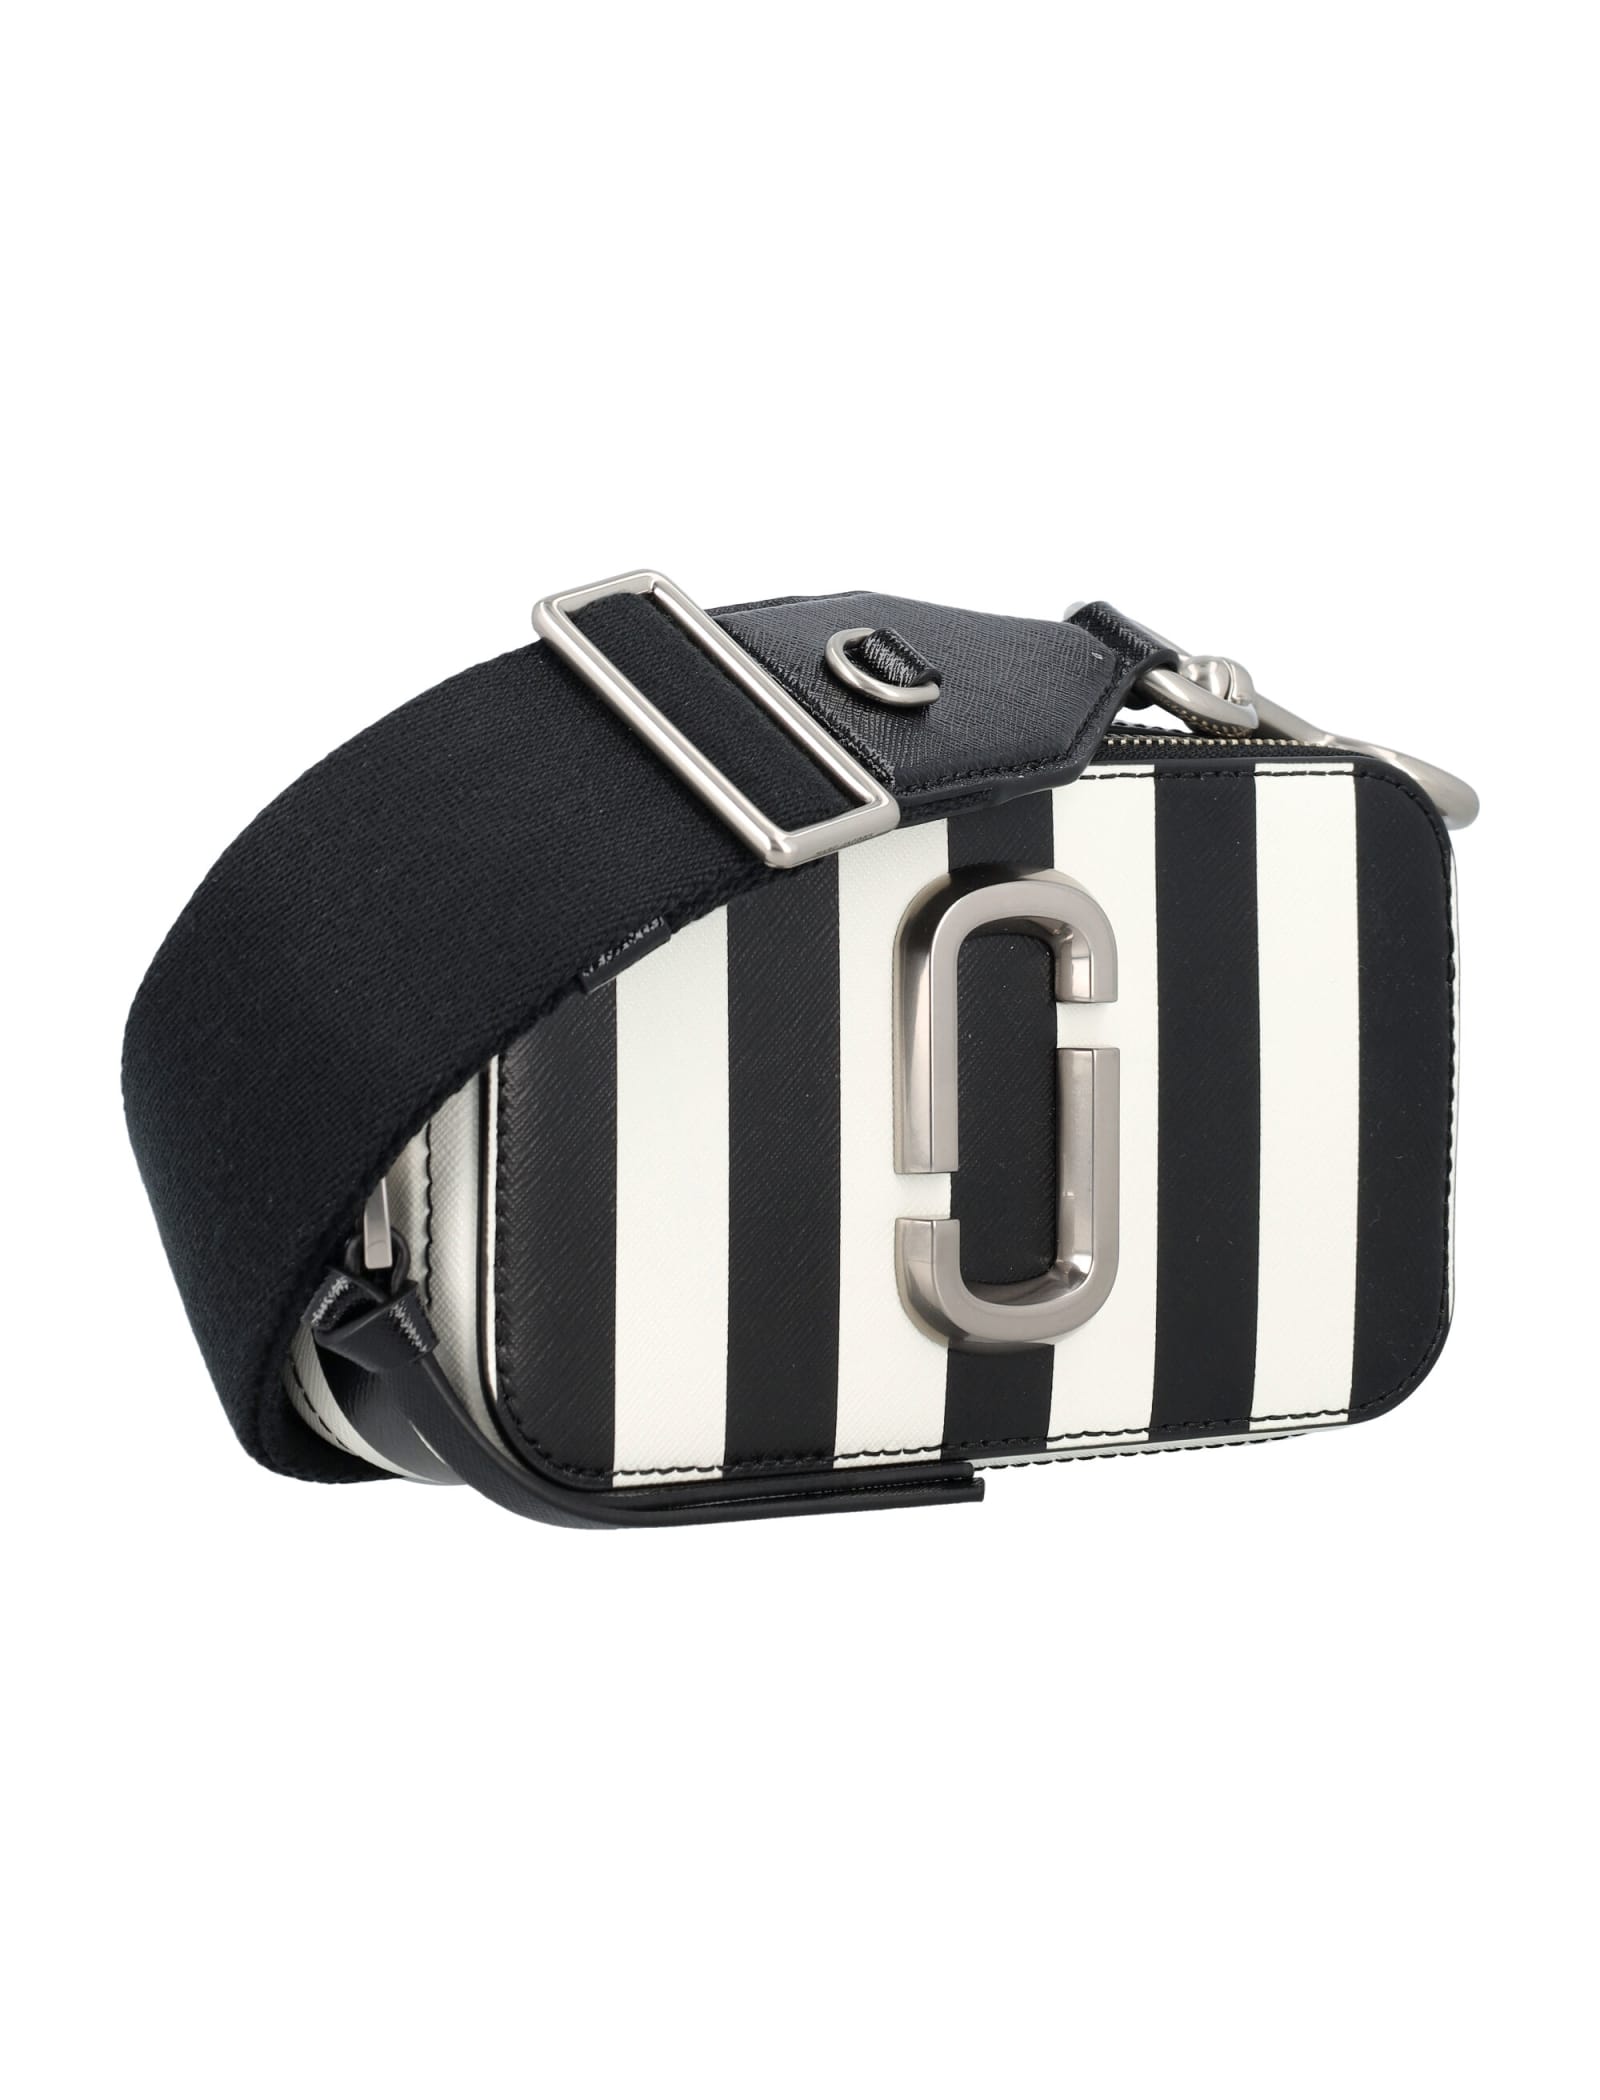 Marc Jacobs The Stripe Snapshot Bag In Black/white